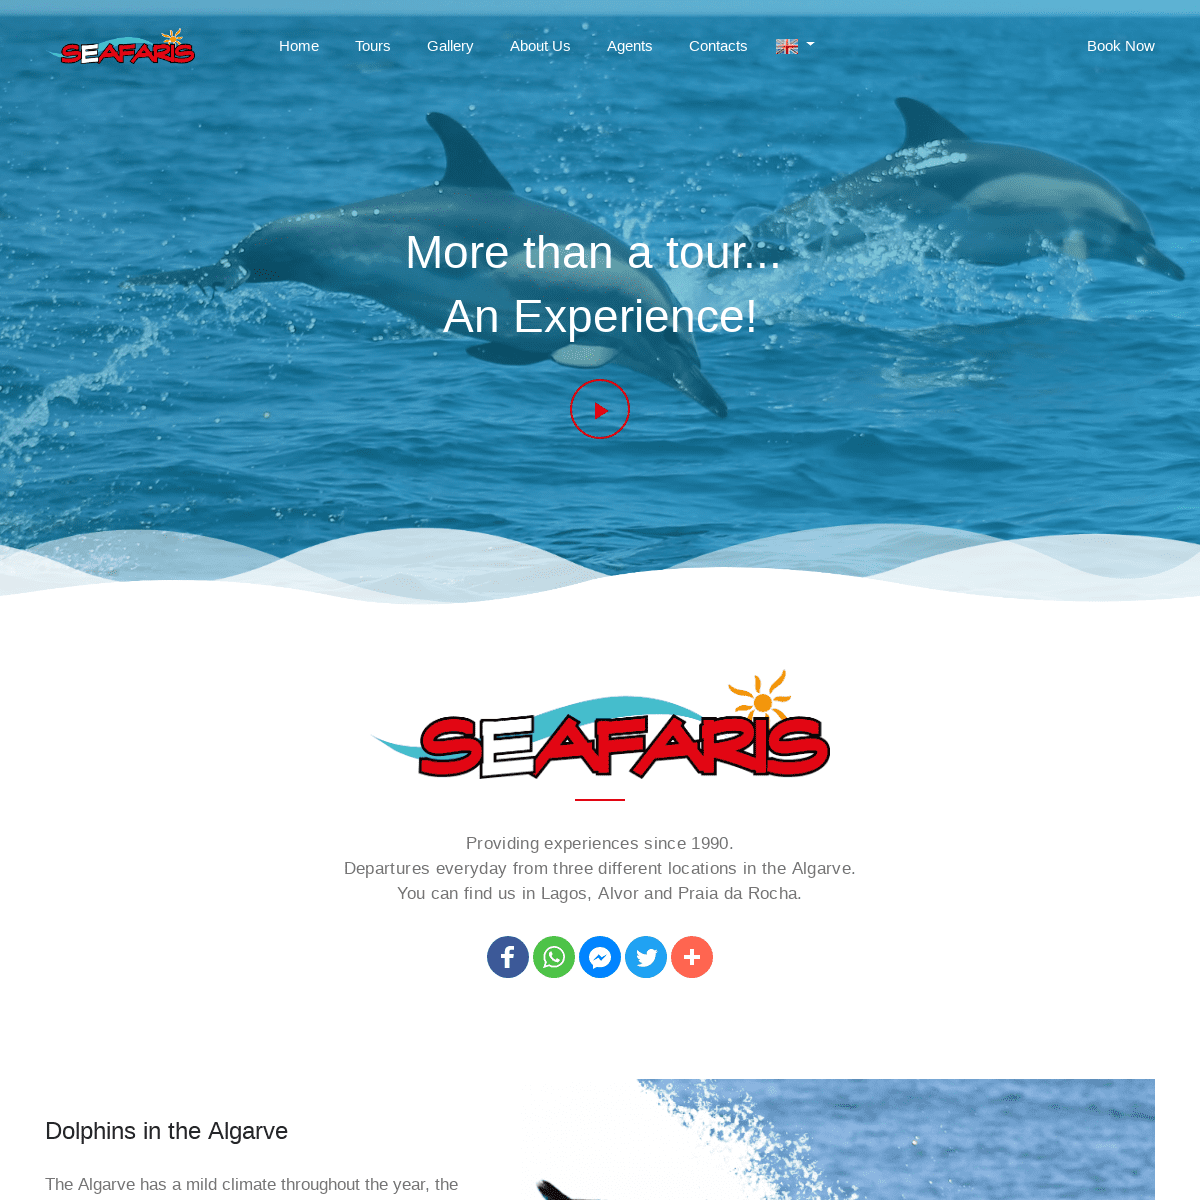 Seafaris - Dolphin watching, Benagil cave trips, Ponta da Piedade grotto tour in Algarve, Portugal